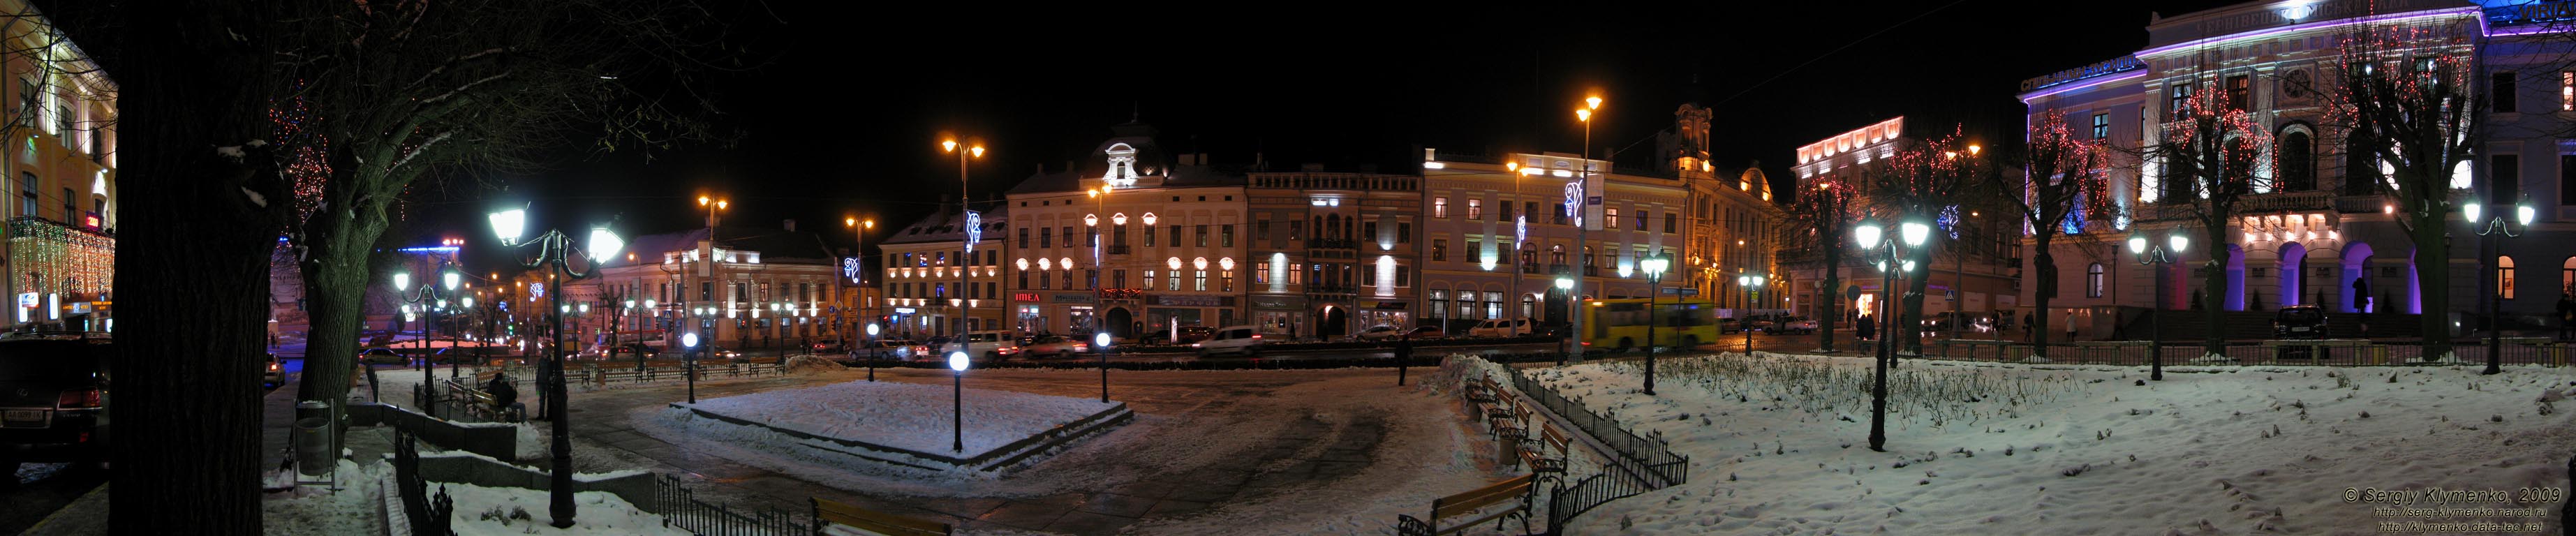 Черновцы. Центральная площадь ночью (панорама ~160°).